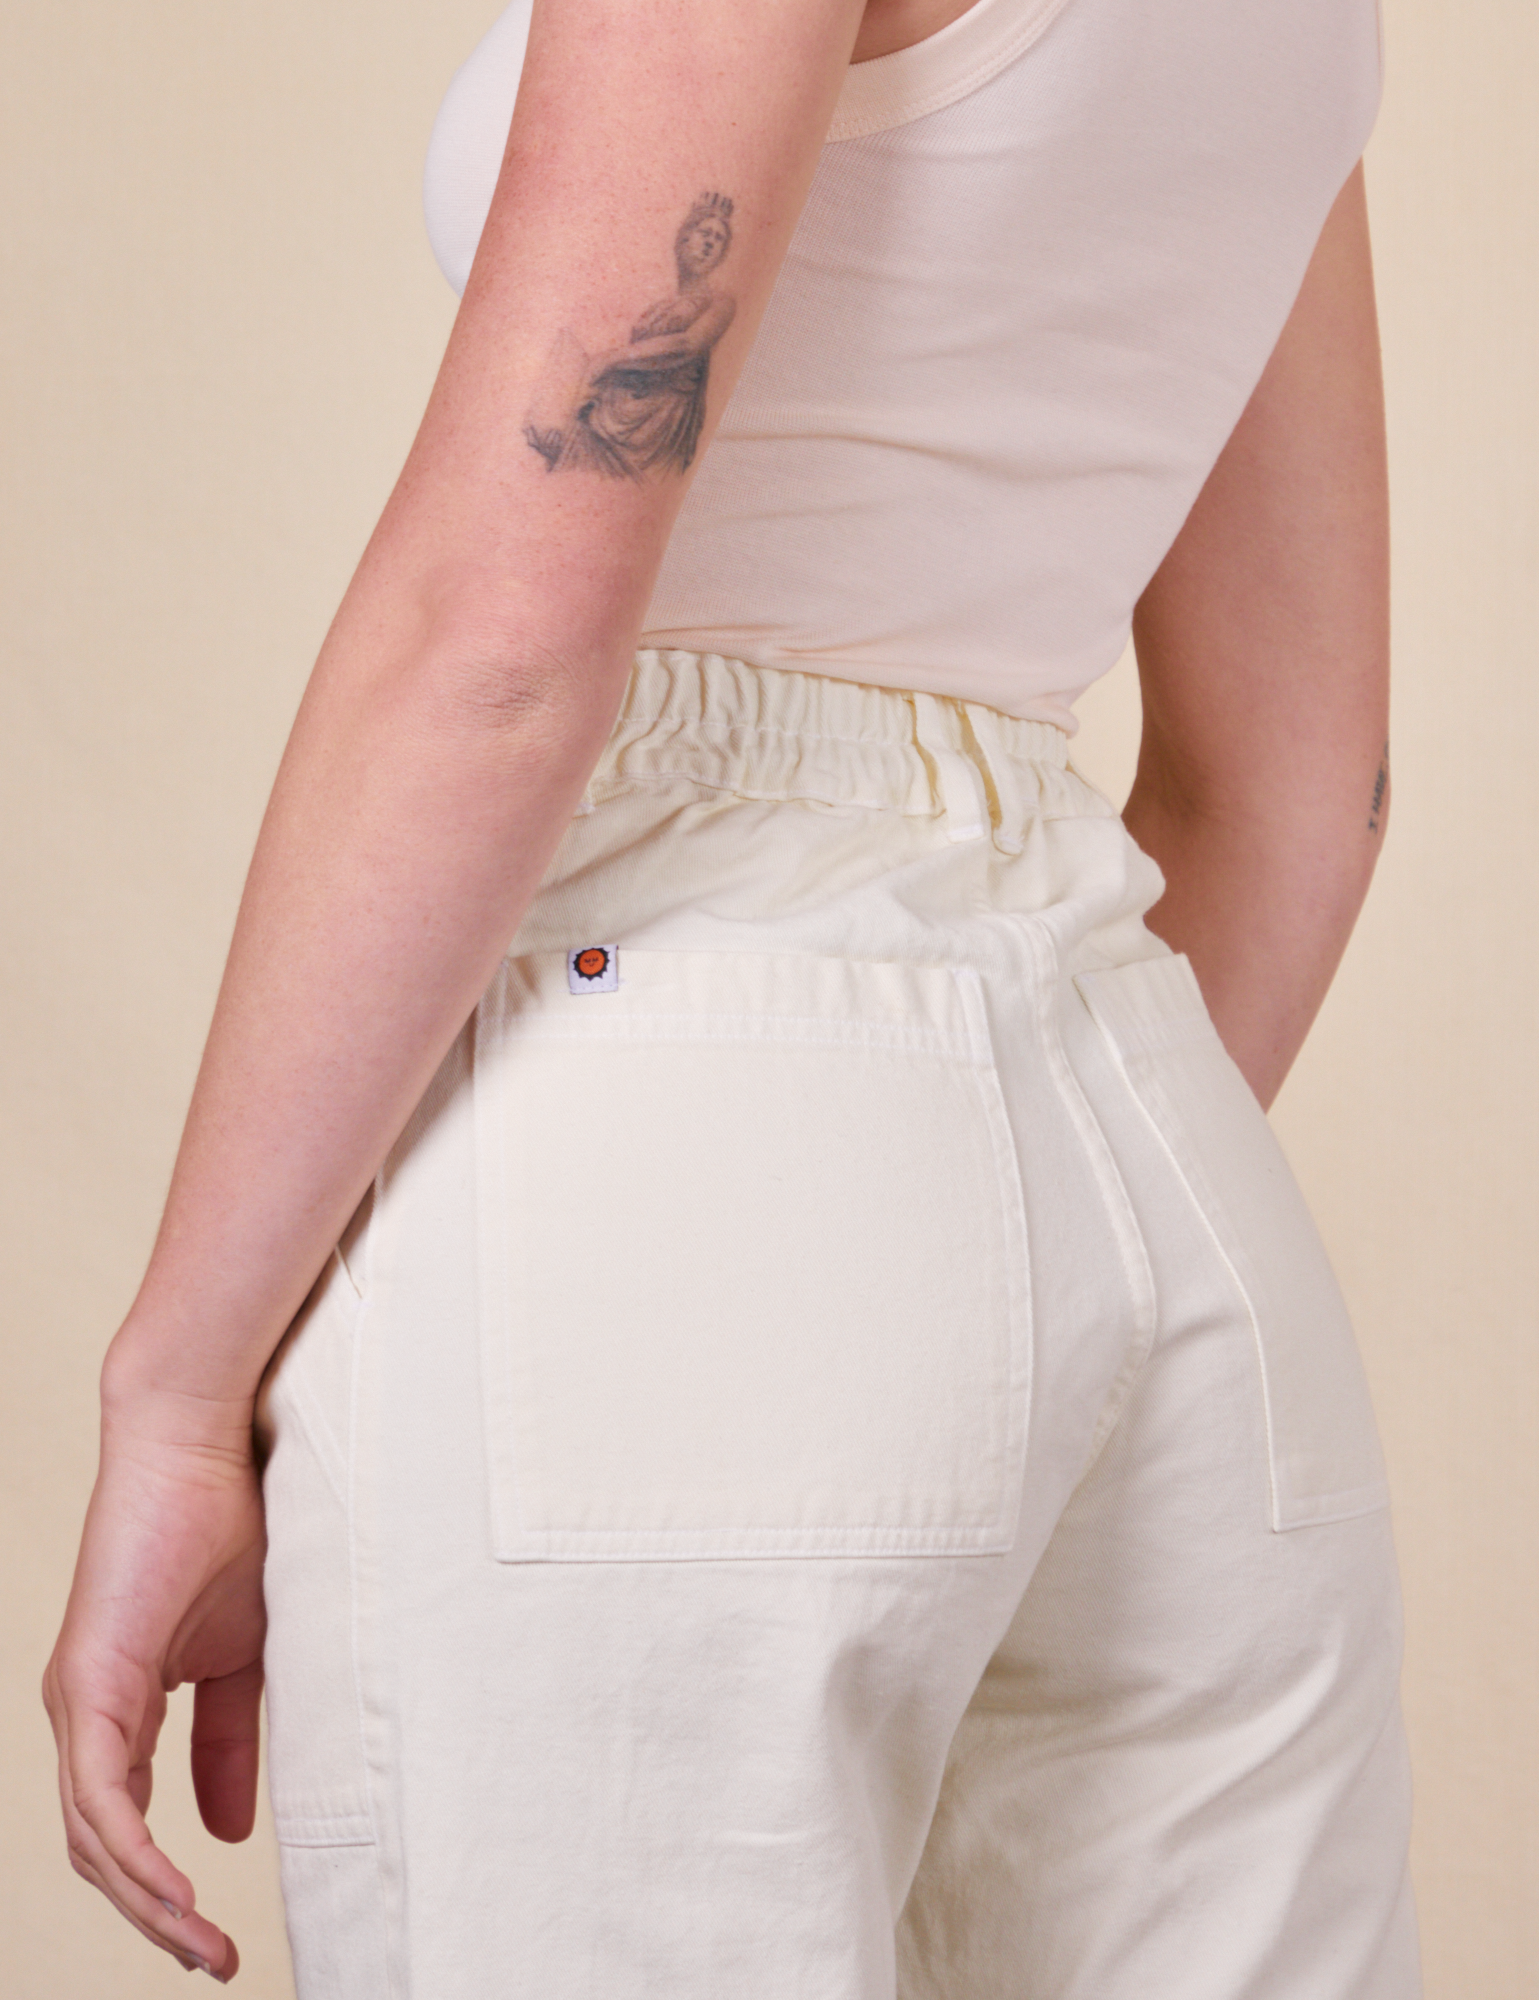 Work Pants in Vintage Tee Off-White back pocket close up on Alex